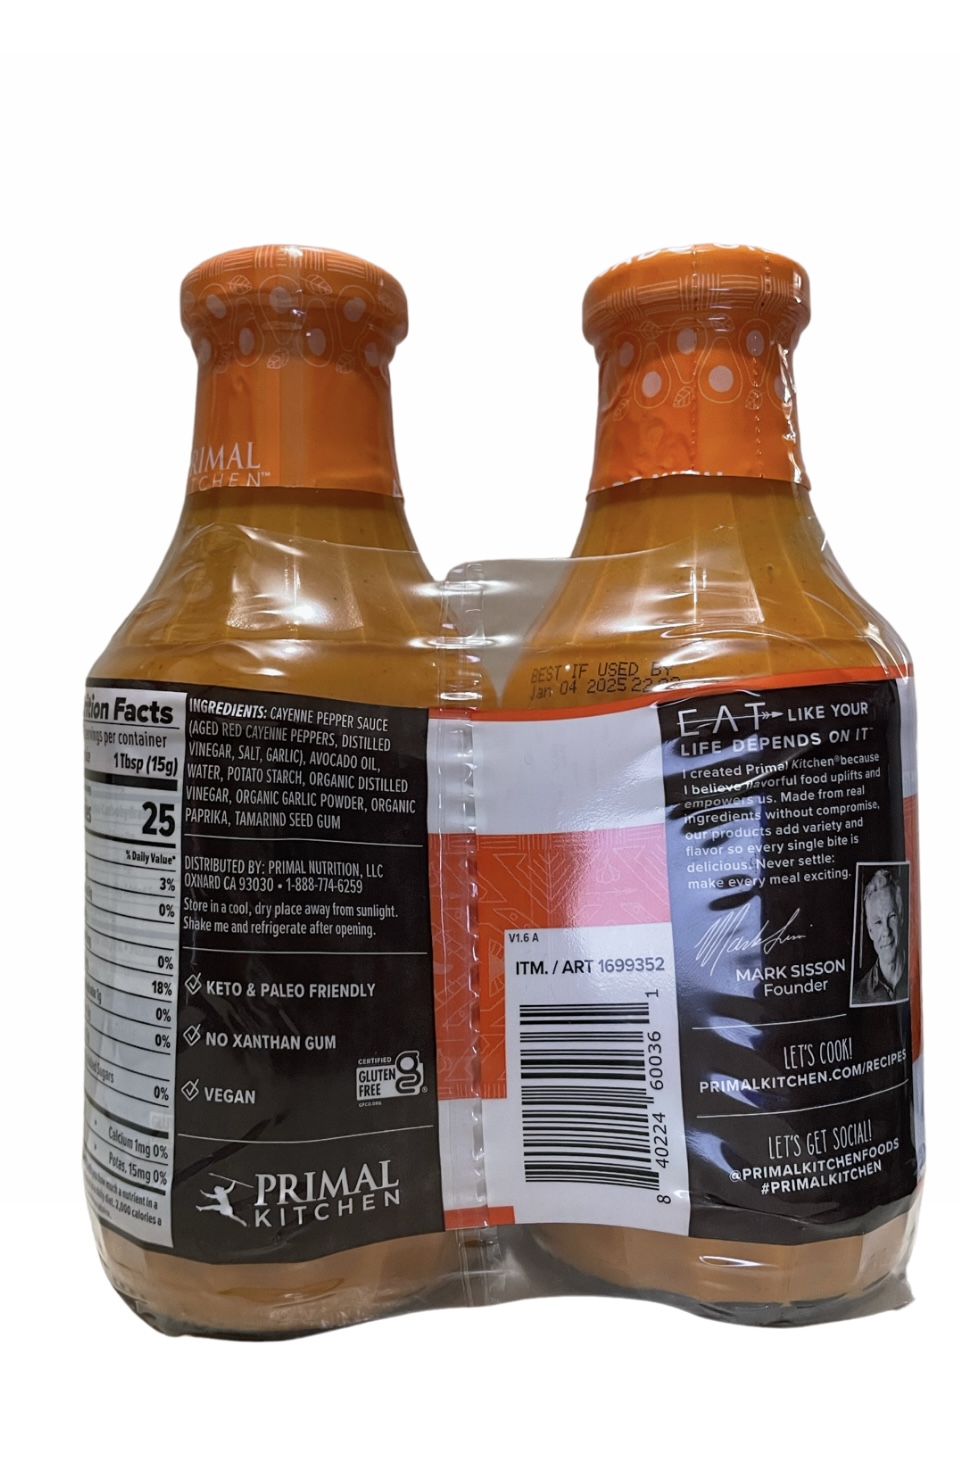 Primal Kitchen No Dairy Buffalo Sauce 16.5 oz 6 Bottles (Free shipping)